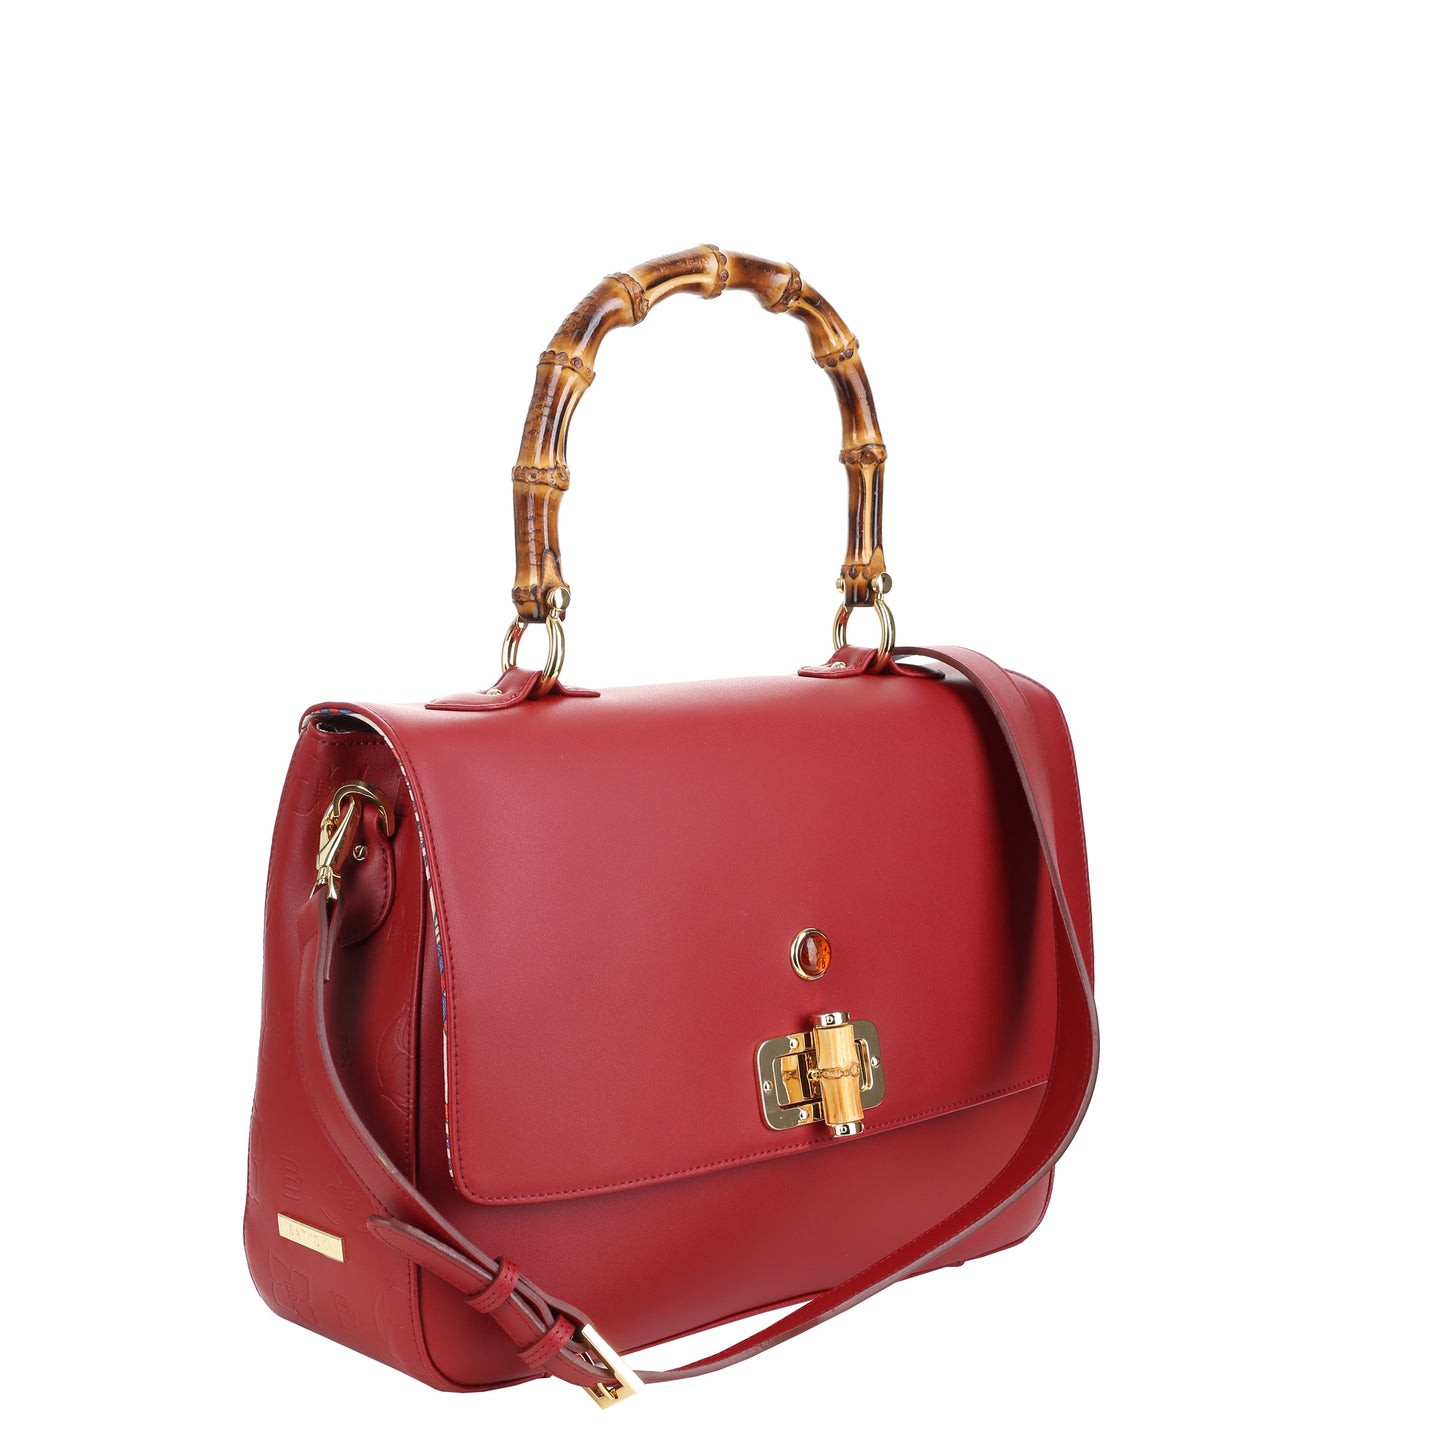 MERA NAPA CLARET women's leather handbag